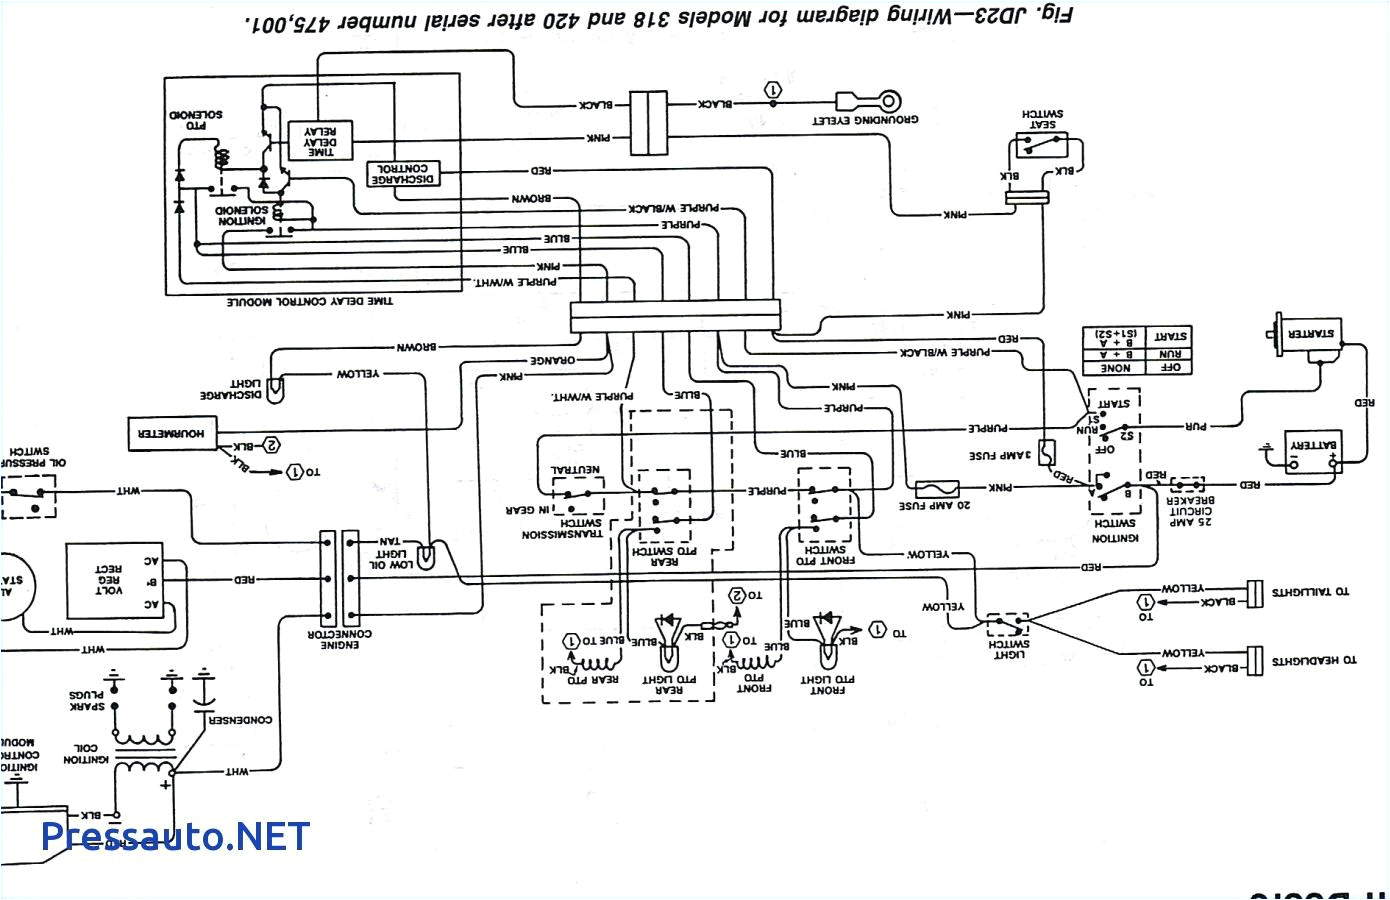 4230 john deere tractor wiring diagram blog wiring diagram john deere 4230 wiring diagram wiring diagram